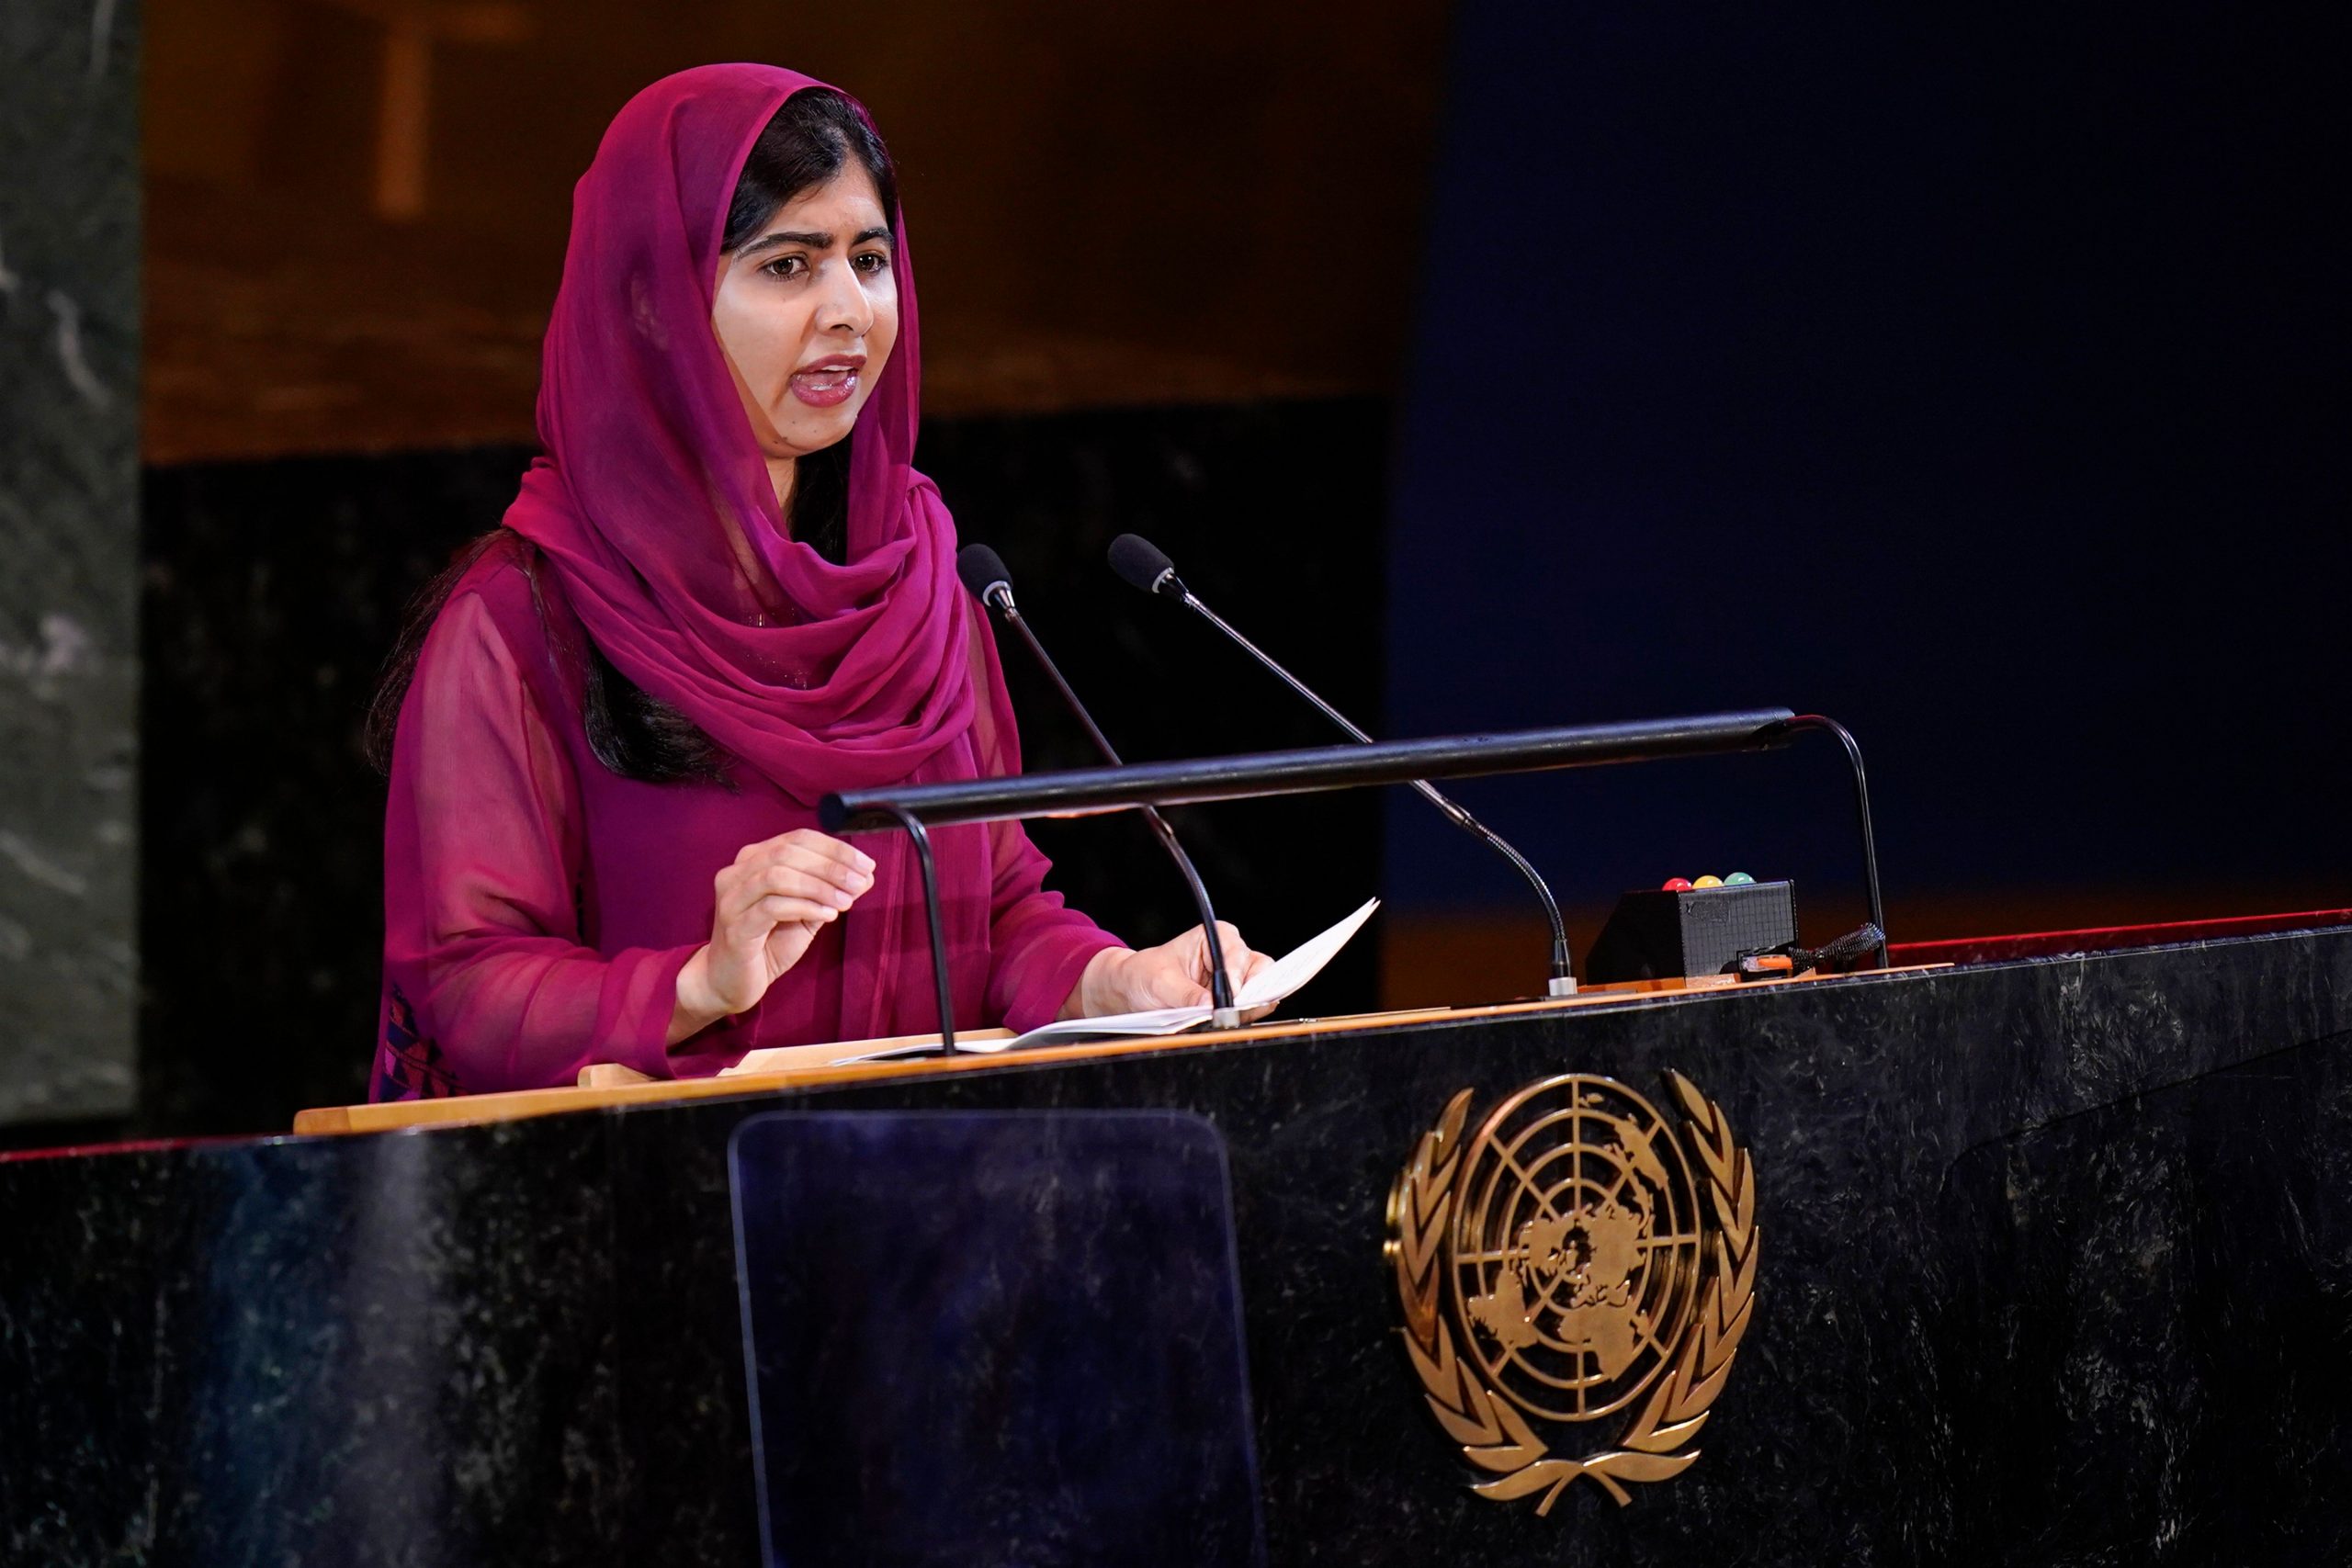 Indian Tv dramas behind Malala Yousafzai’s stance on women’s societal role